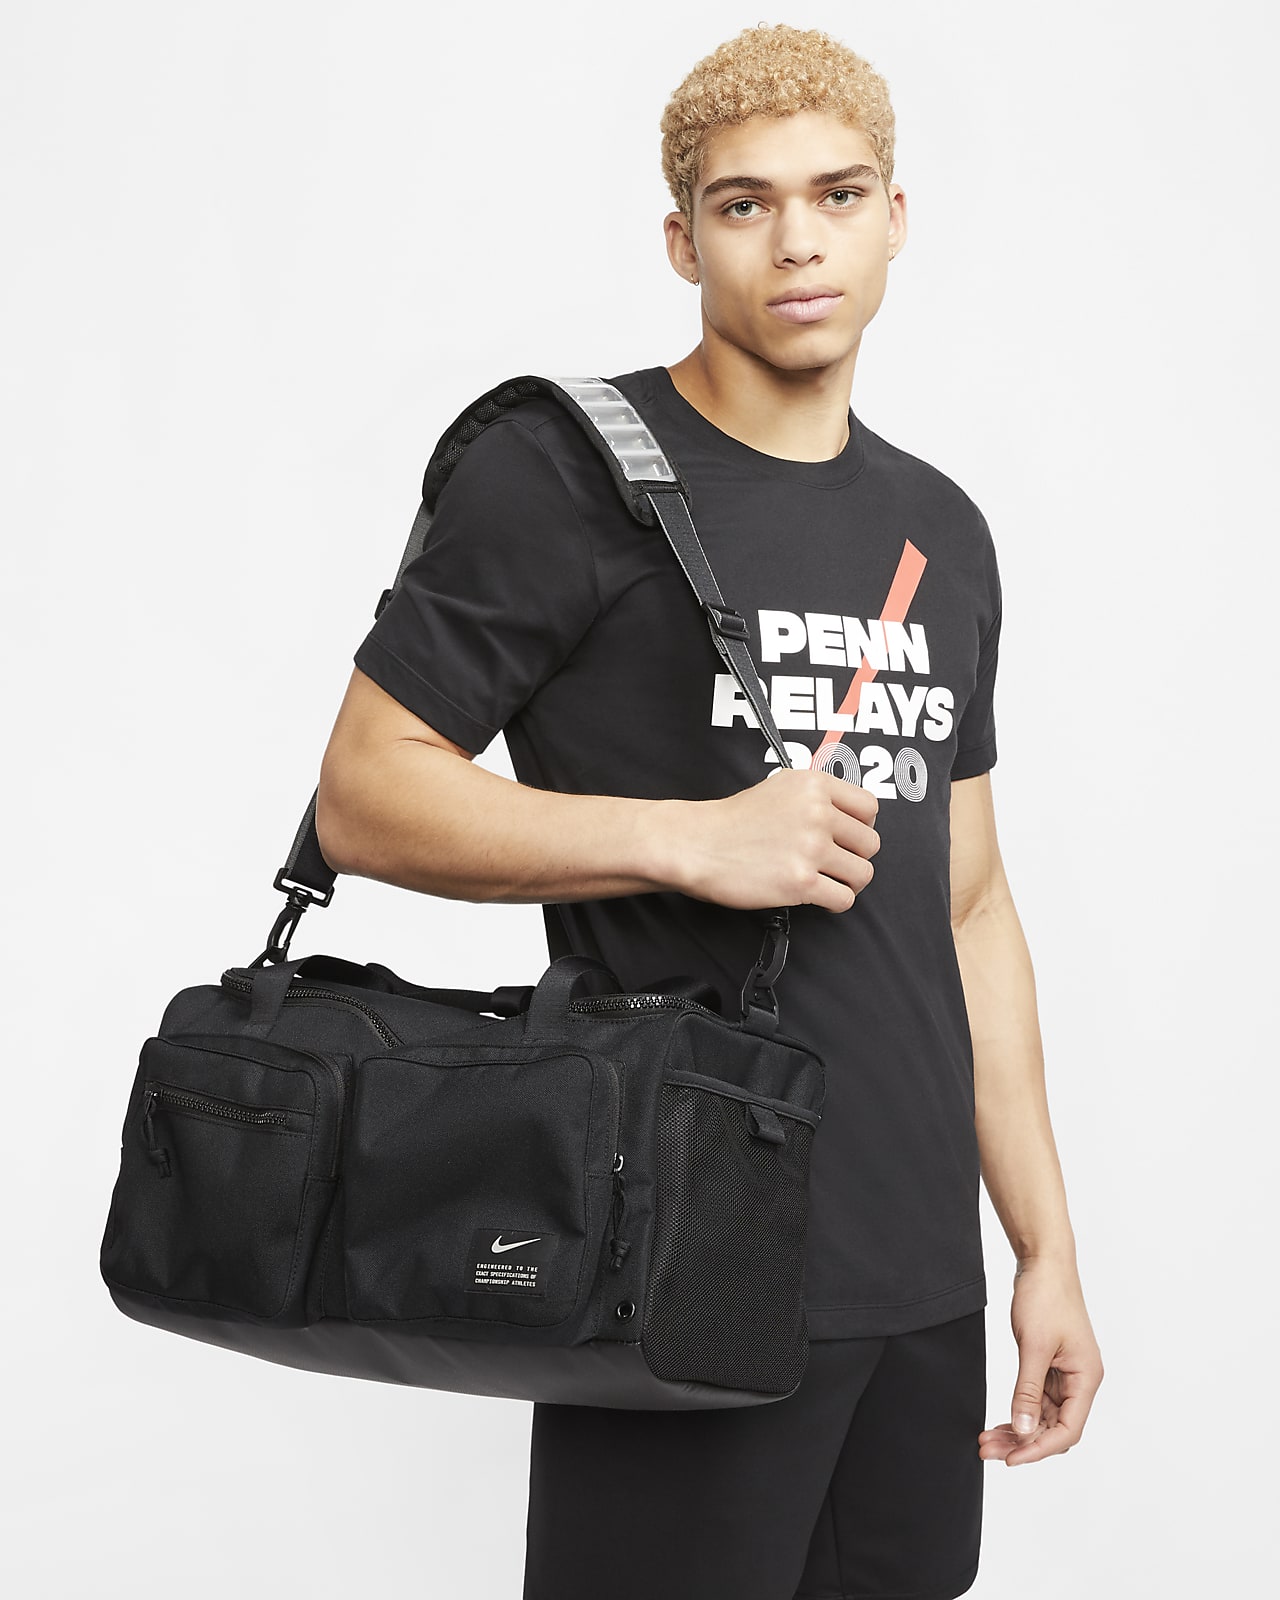 small black nike duffel bag